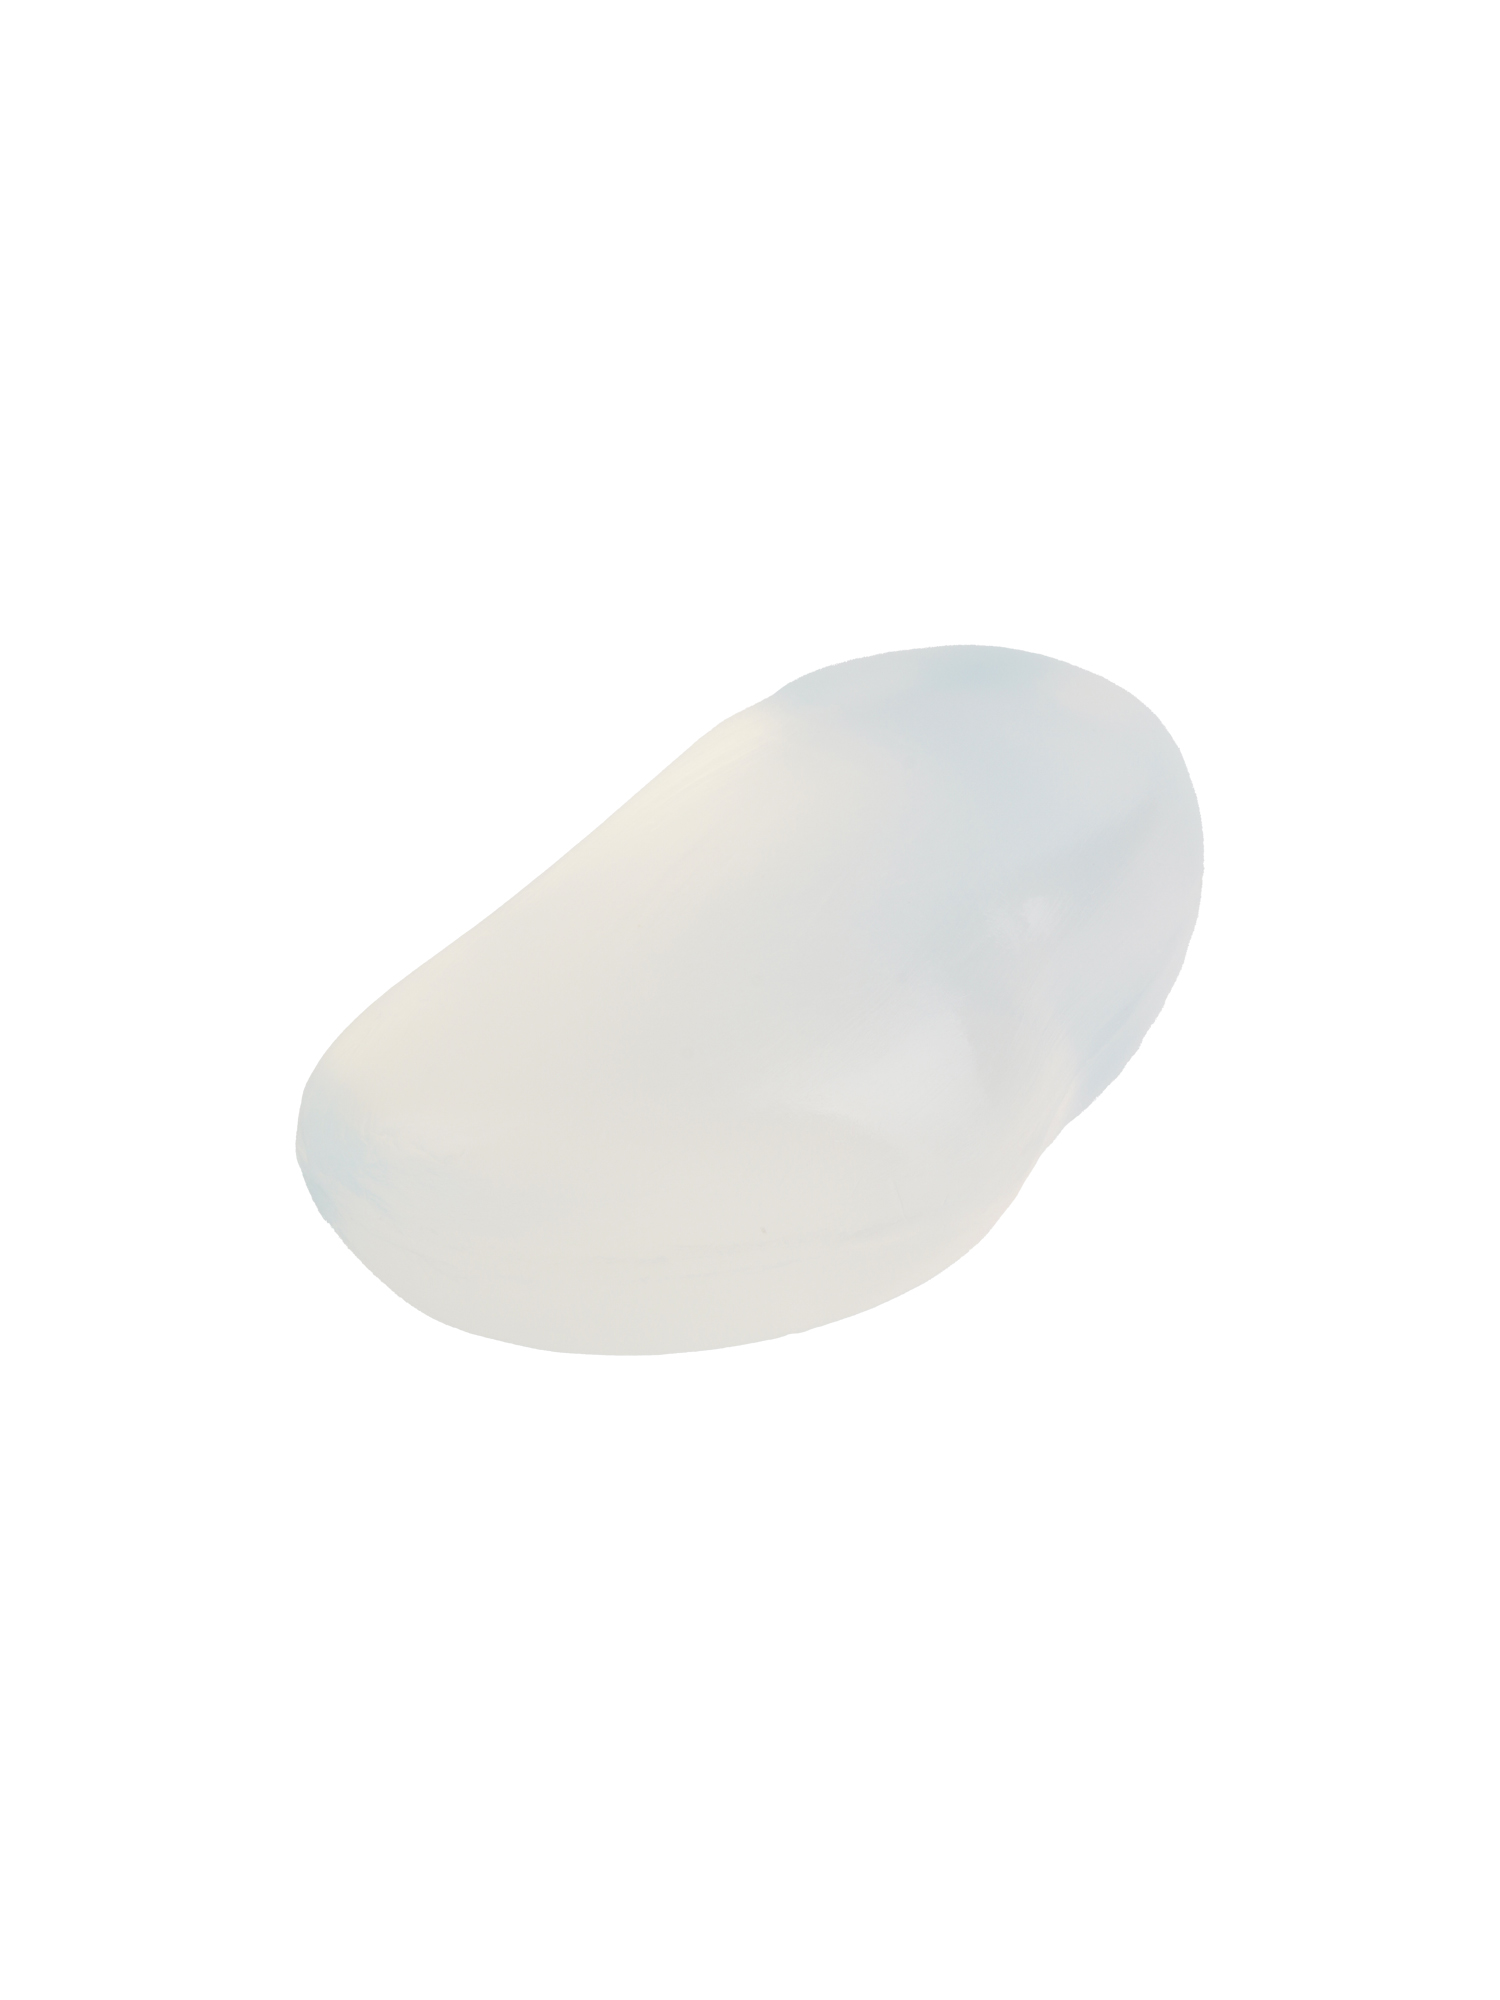 Seaglass Soap Shell White